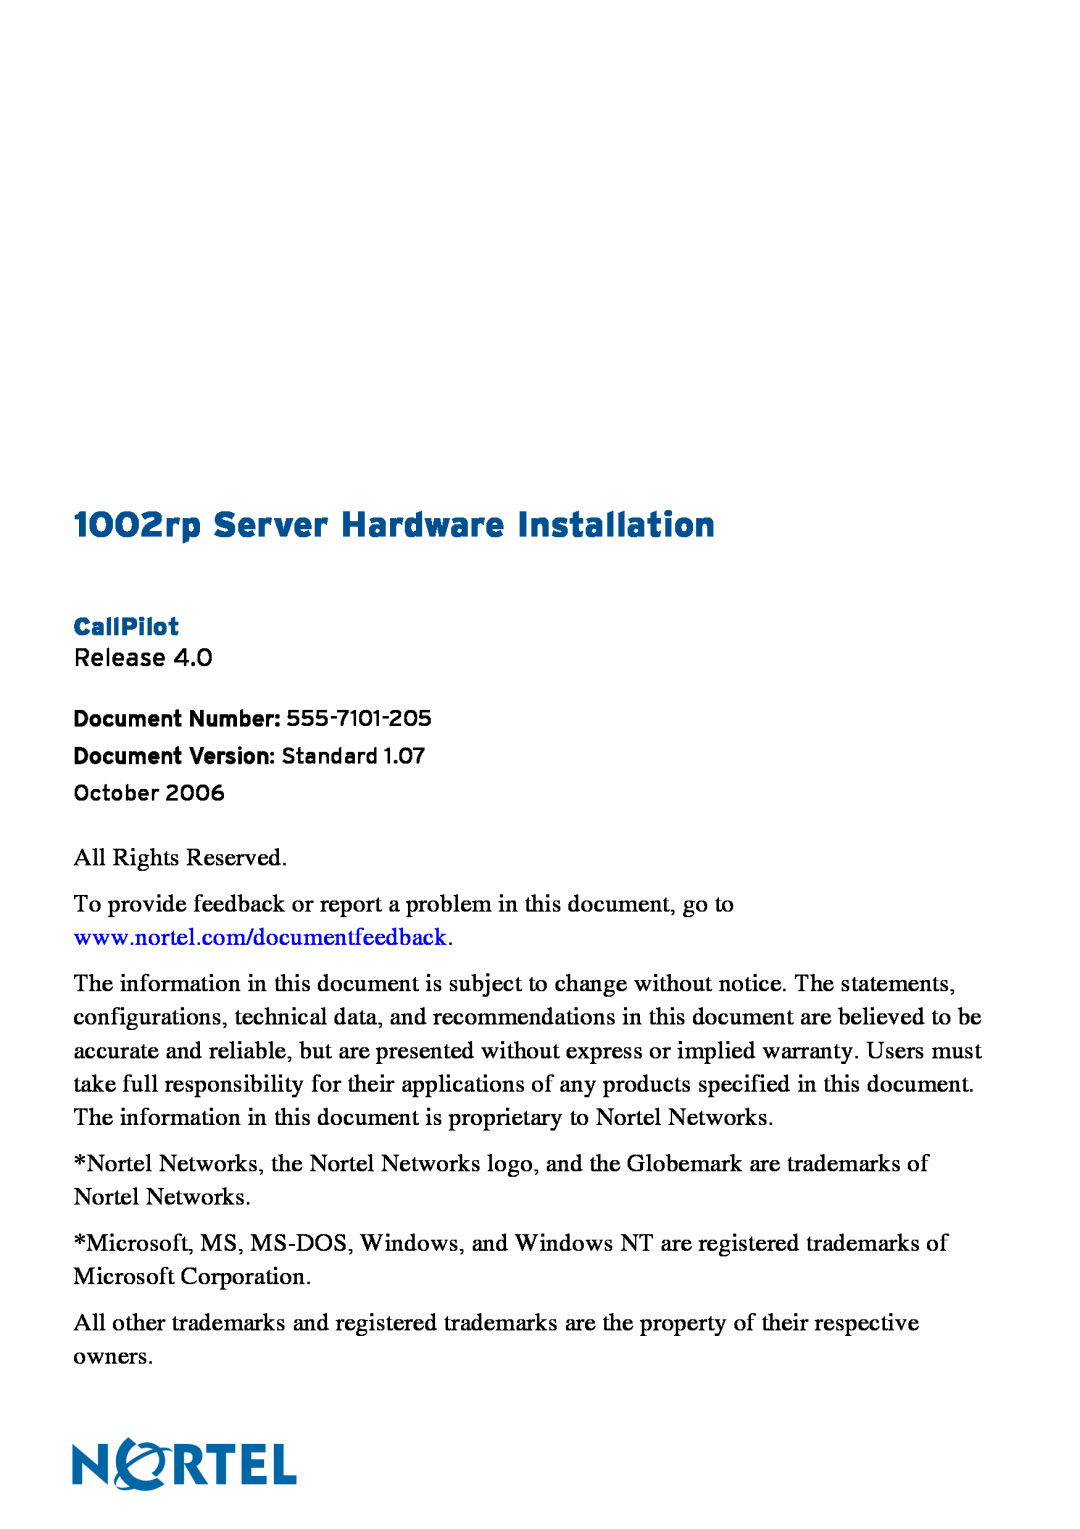 Nortel Networks manual 1002rp Server Hardware Installation, CallPilot 